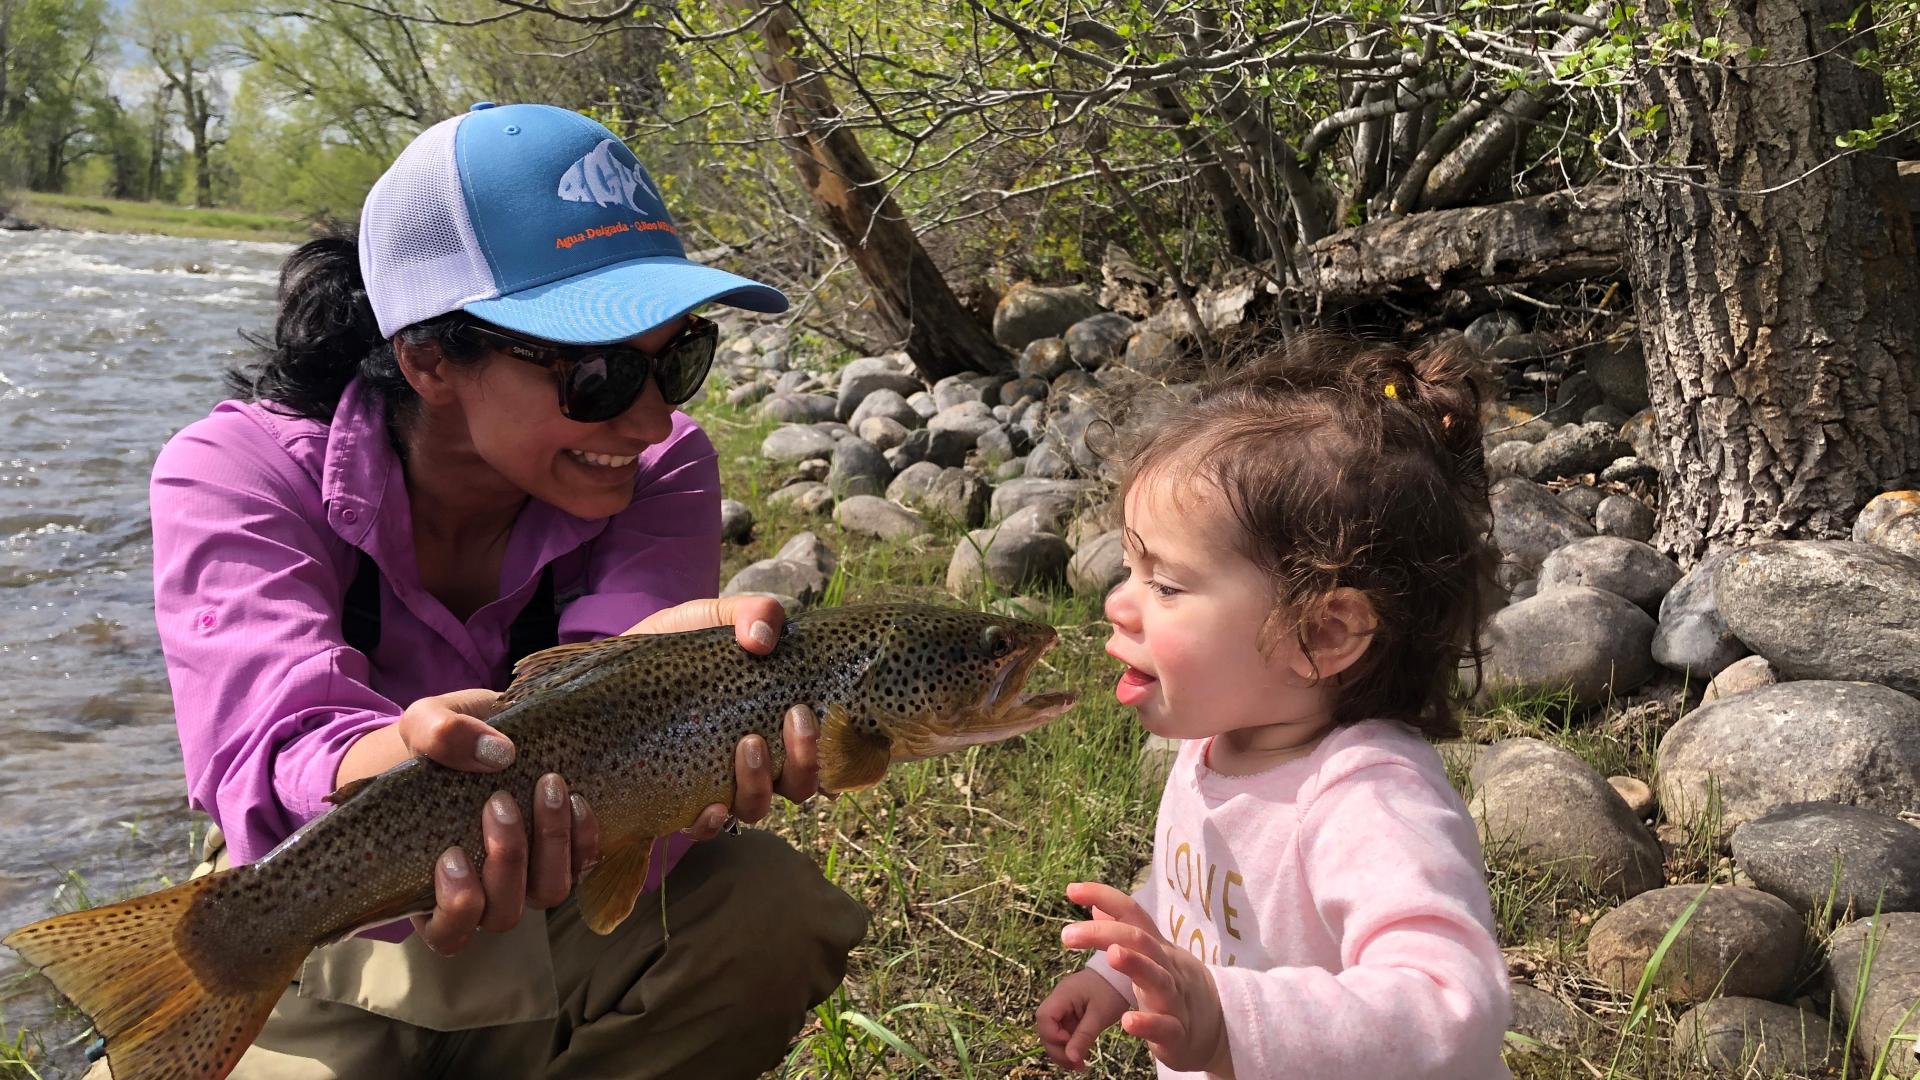 Karen shows her toddler a freshly caught trout along a river bank